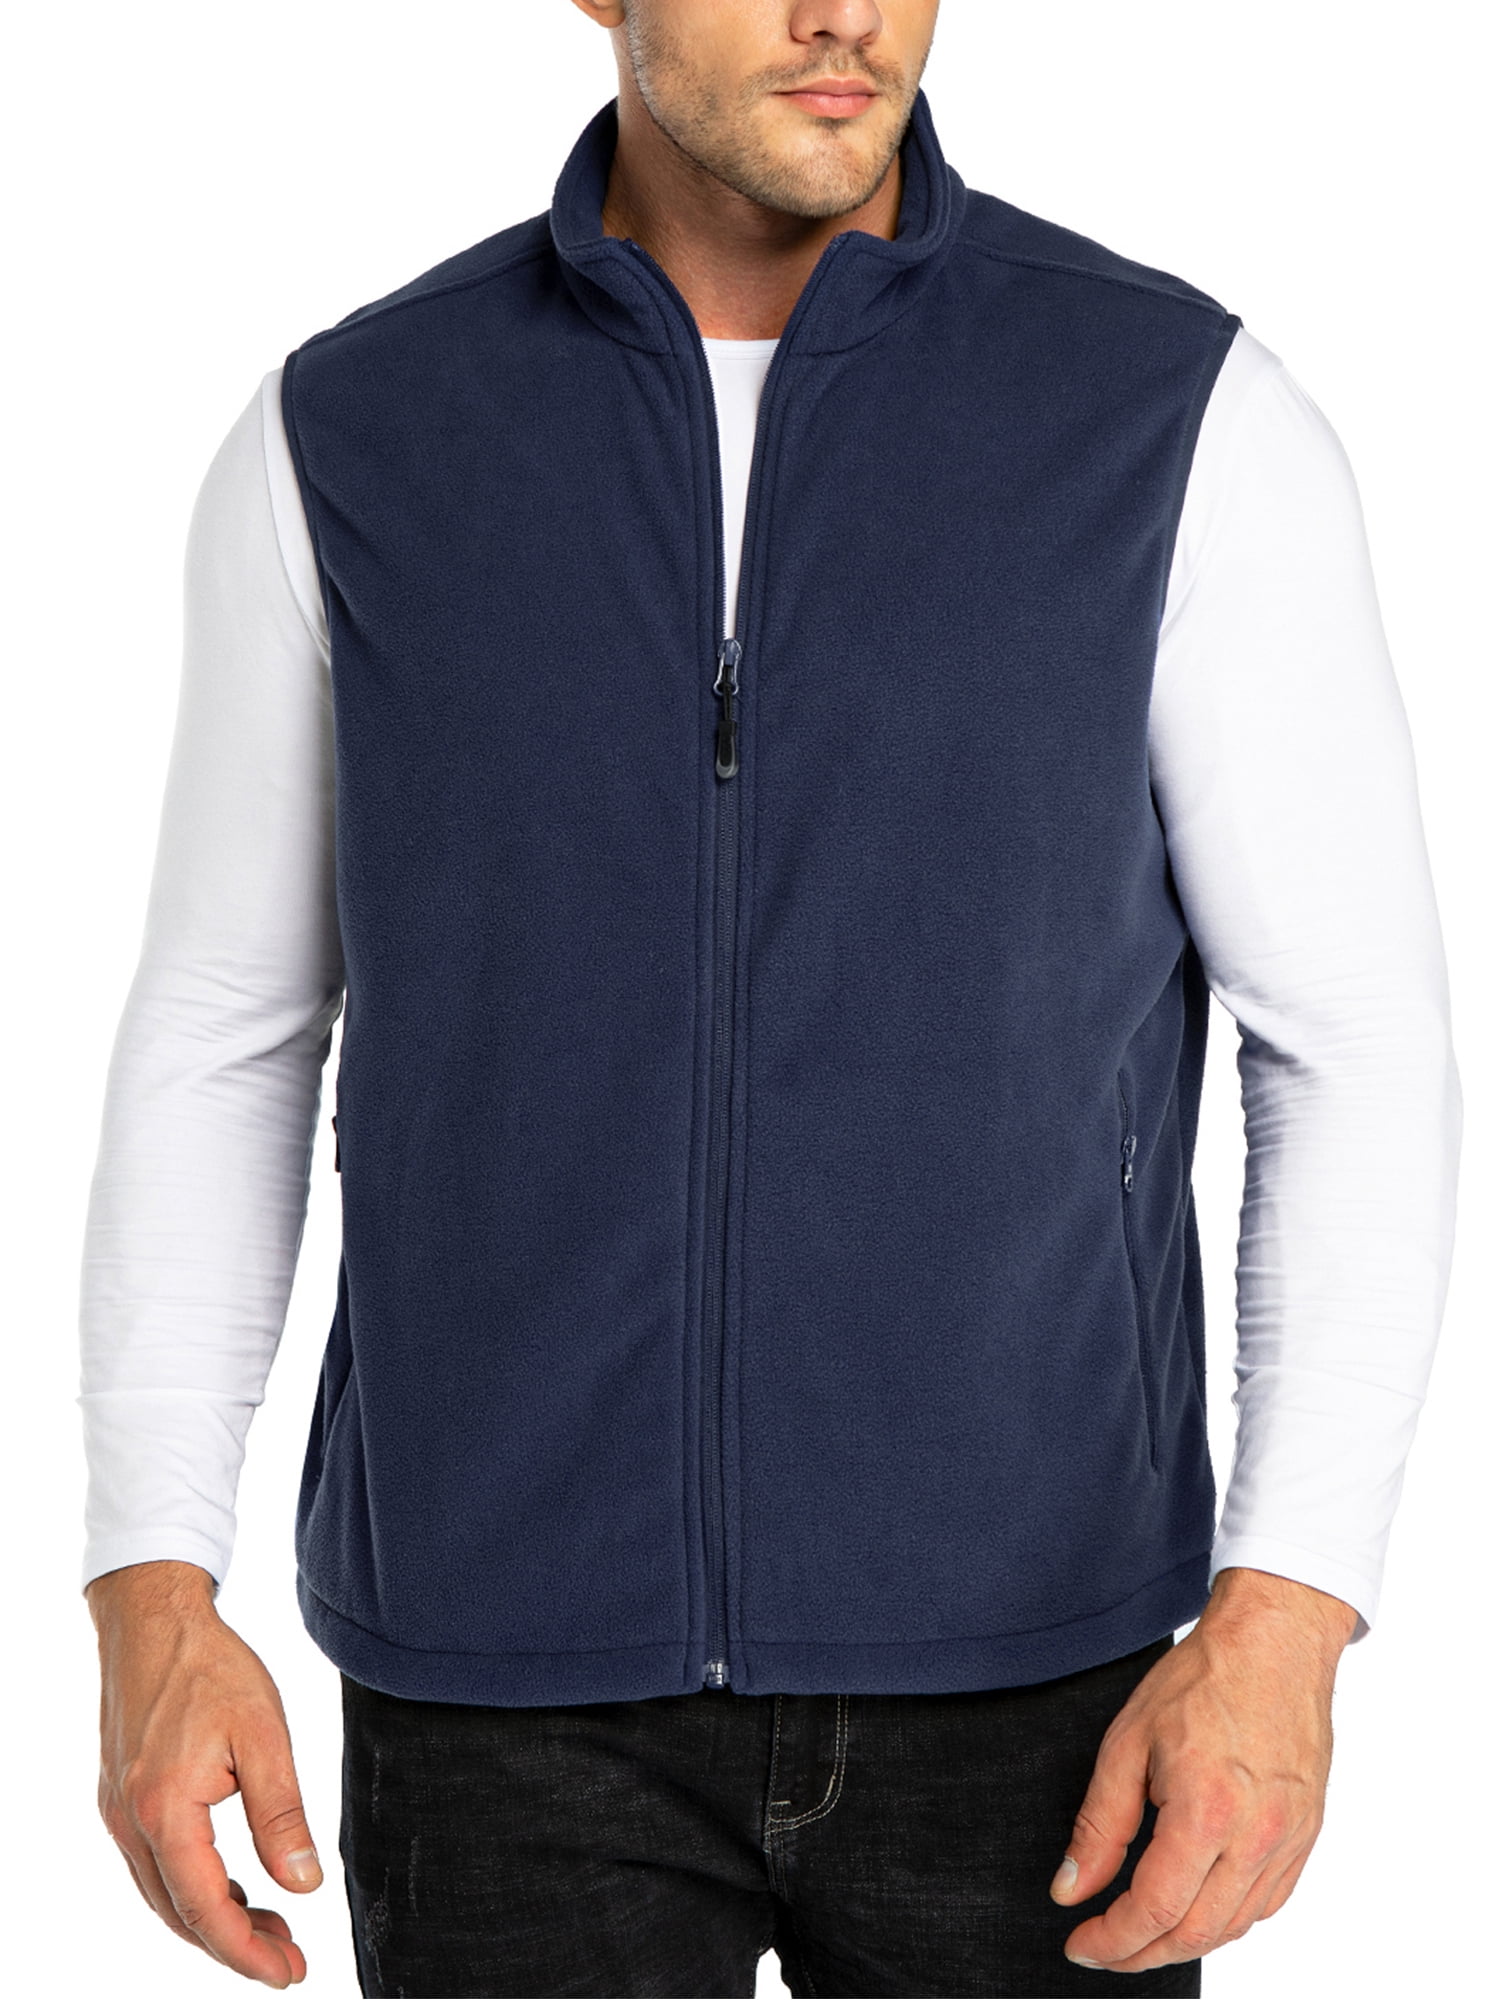 33,000ft Men's Fleece Vest, Lightweight Warm Zip Up Polar Vests Outerwear  with Zipper Pockets, Sleeveless Jacket